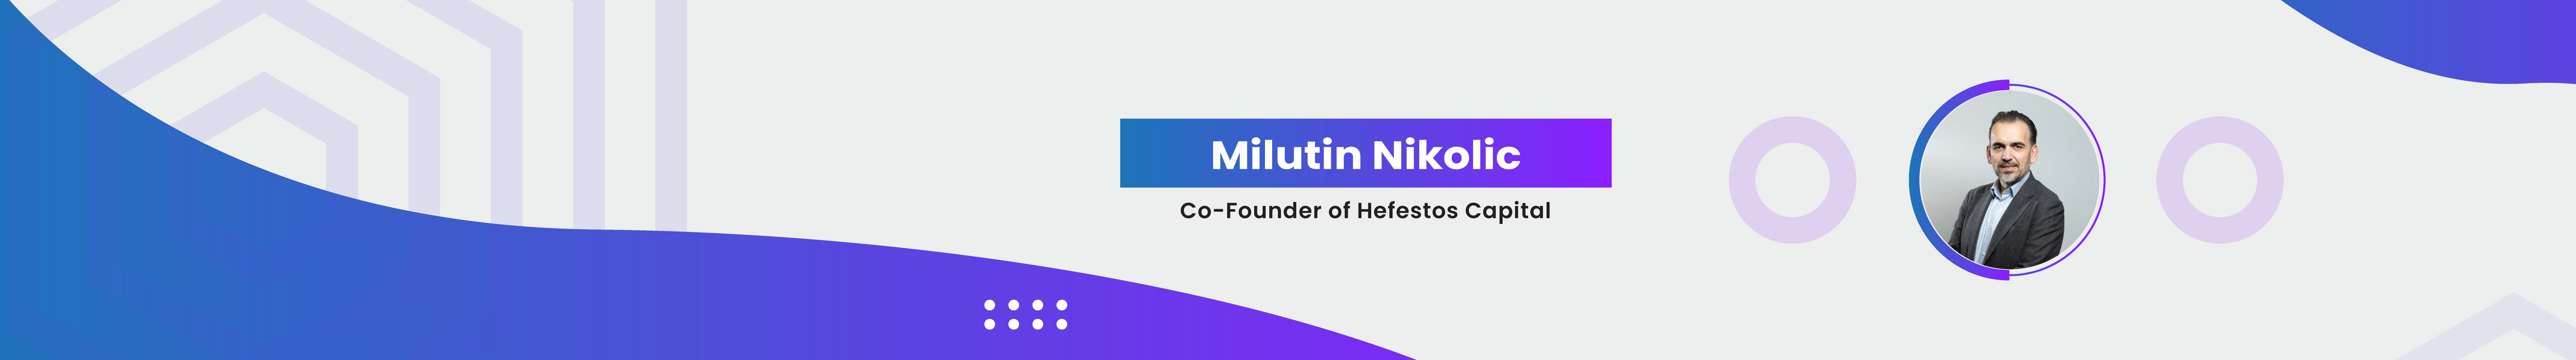 Baner profilu użytkownika Milutin Nikolic